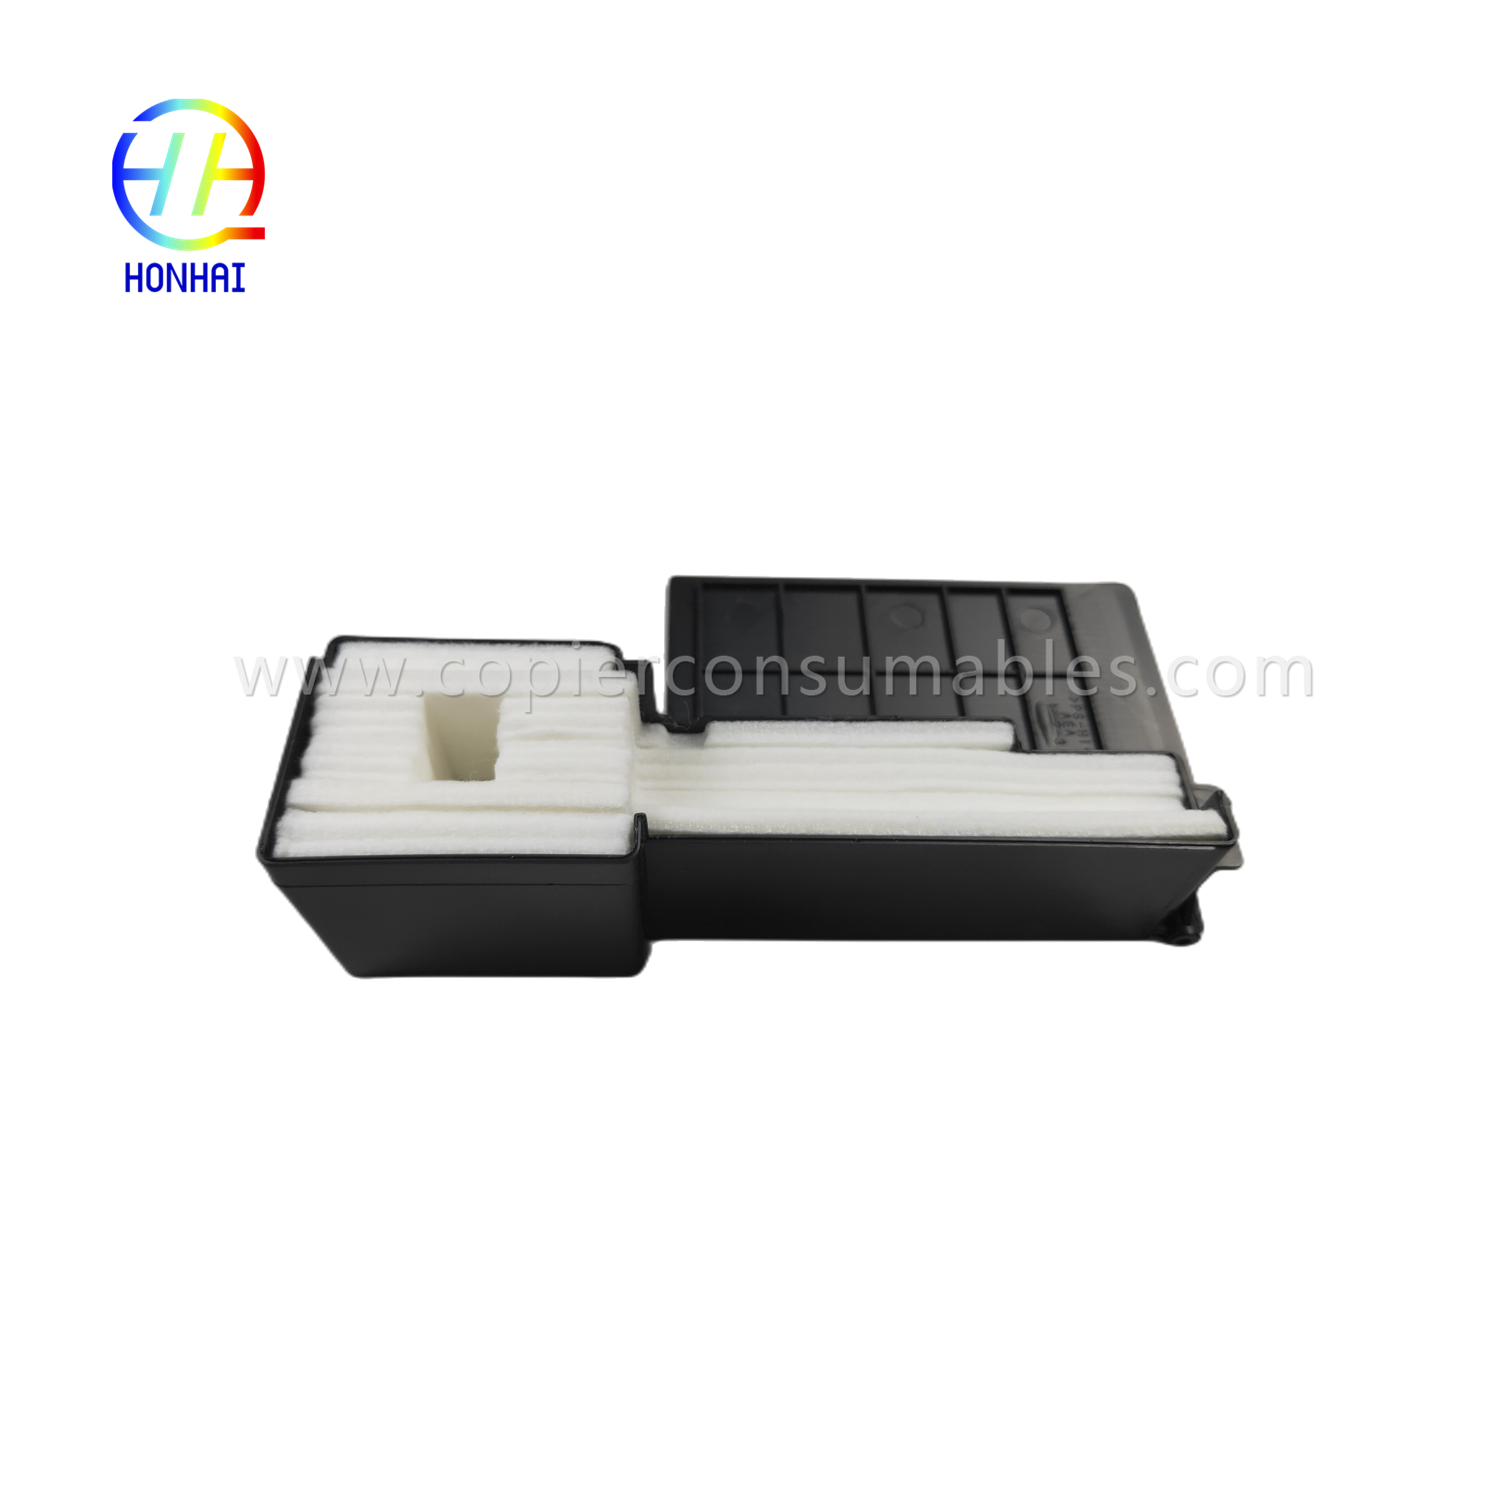 Sampah Ink Pad Pack kanggo Printer Epson L220 L360 L380